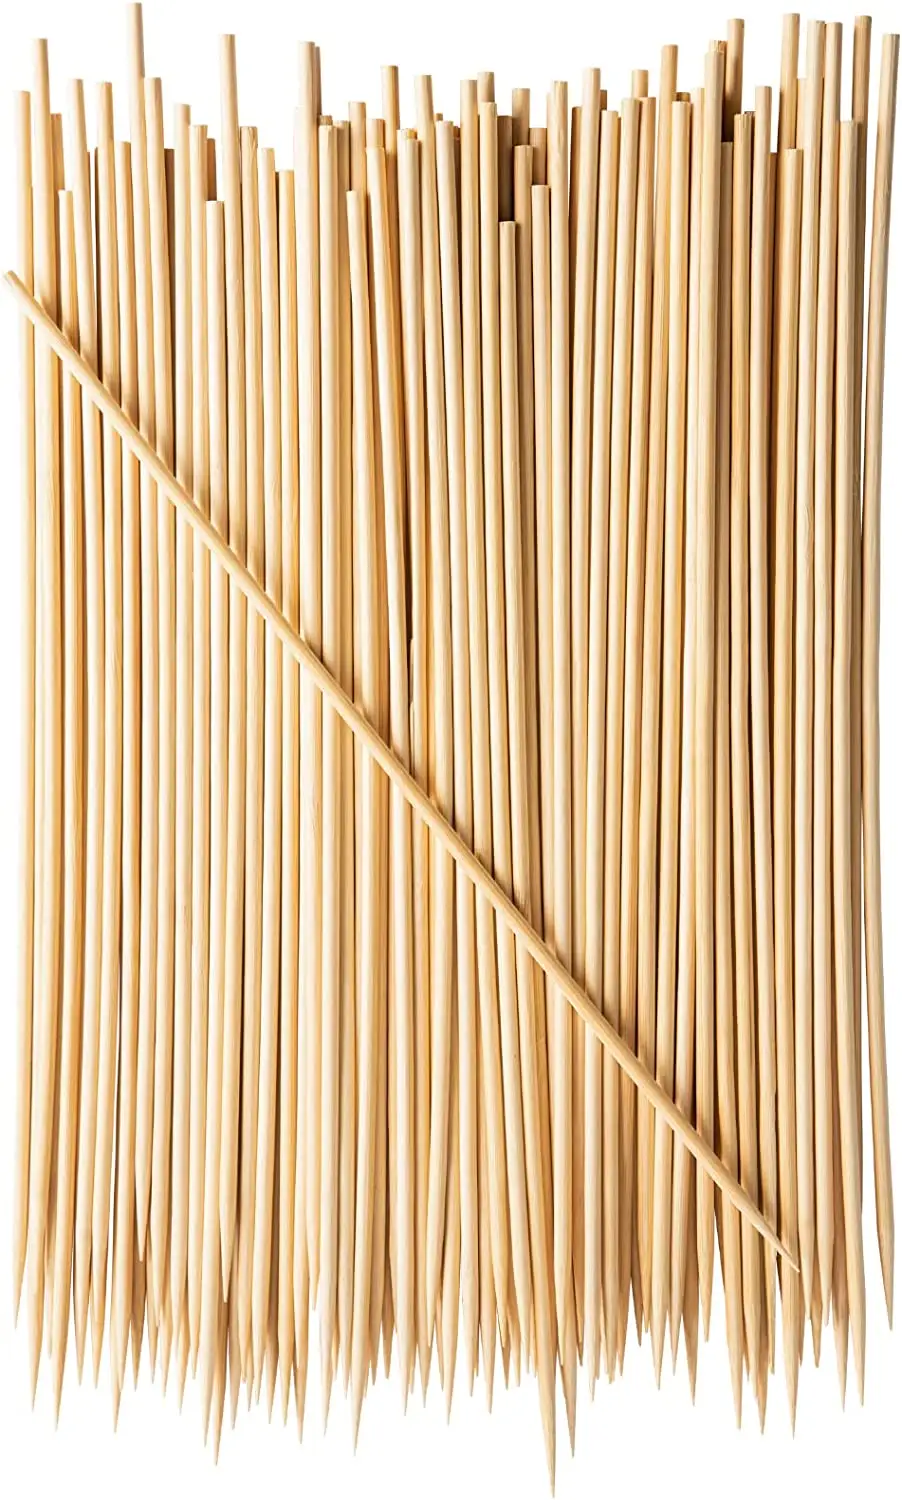 Wholesale Bamboo Sticks BBQ Skewers Round Bamboo Sticks